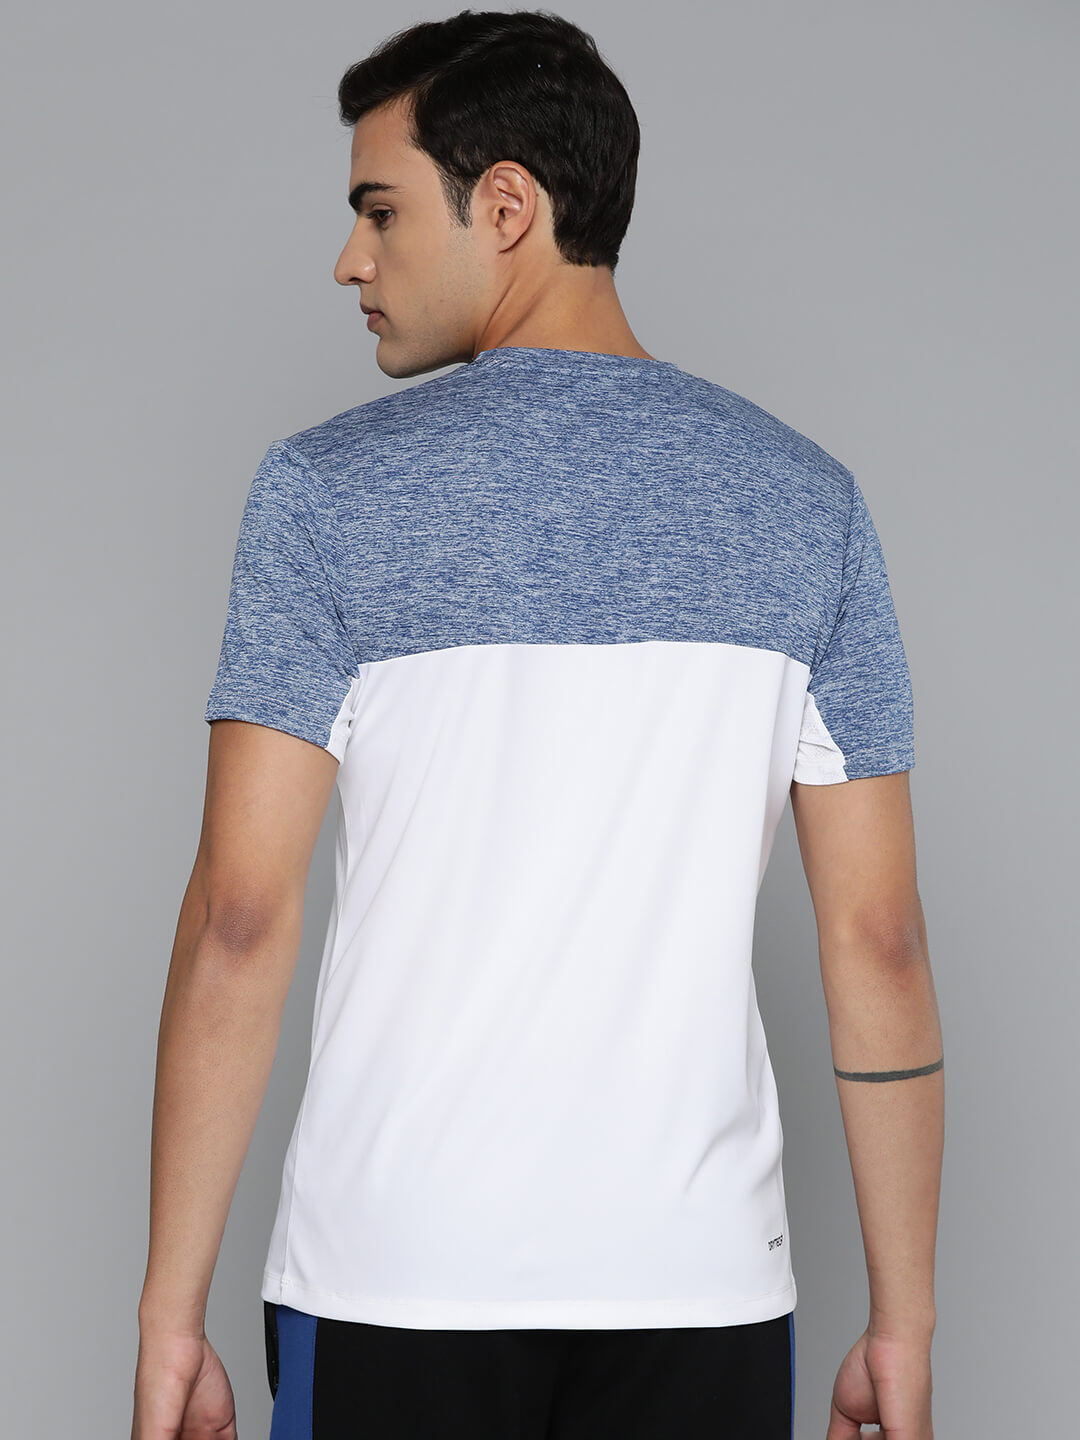 Alcis Men White Blue Colourblocked Dry Tech Slim Fit Sports T-shirt